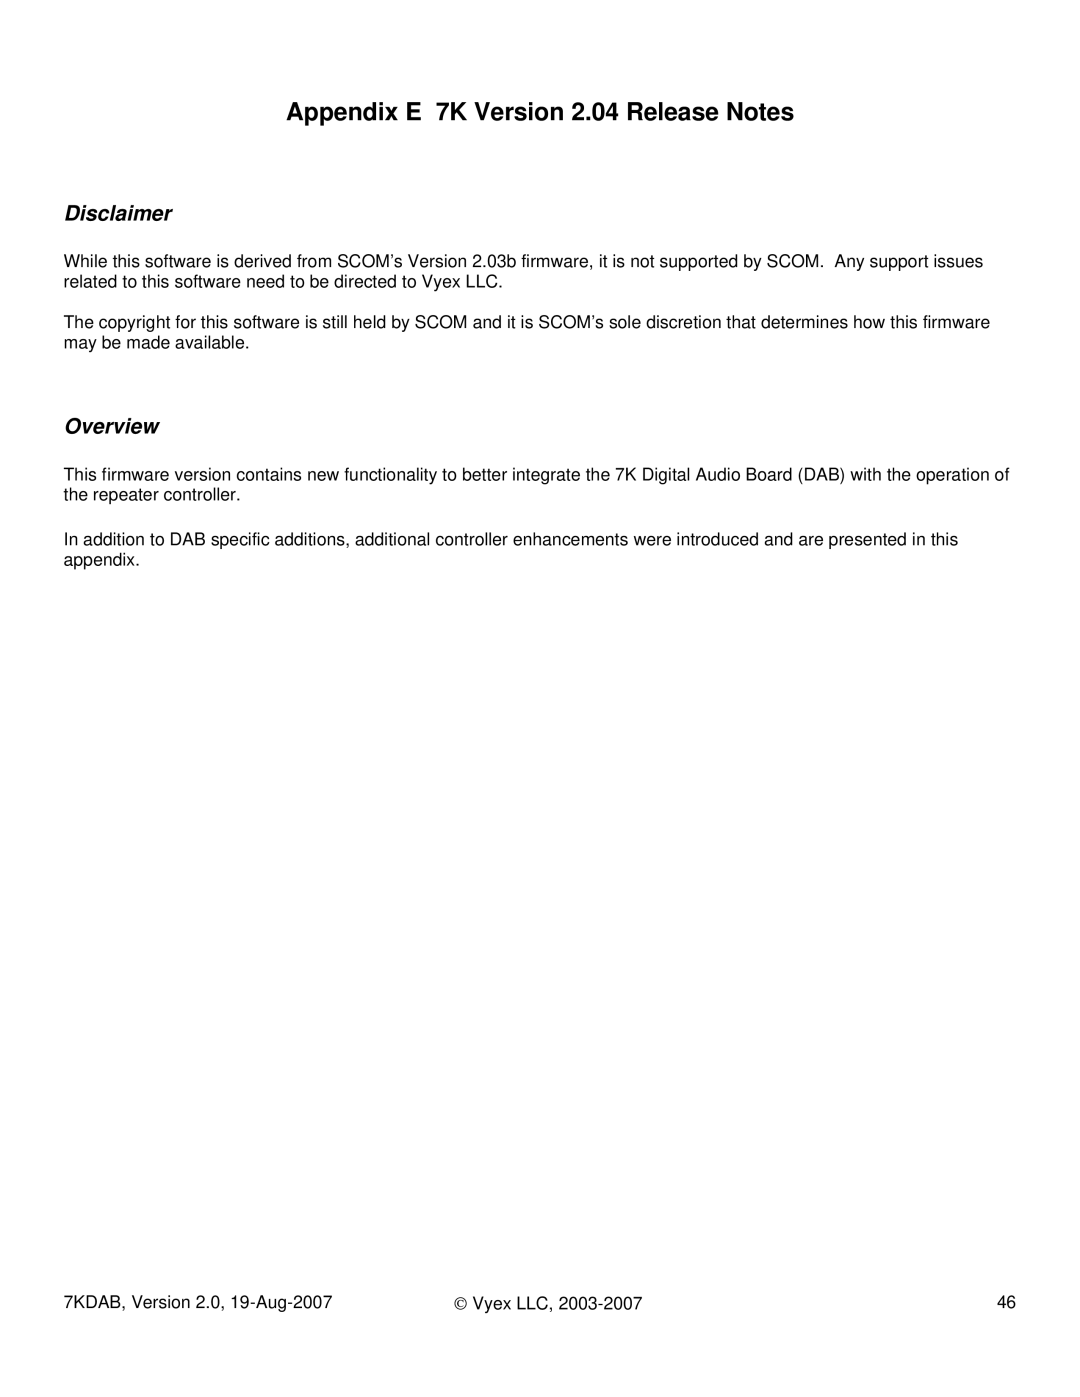 FARGO electronic 7KDAB manual Appendix E 7K Version 2.04 Release Notes, Disclaimer, Overview 